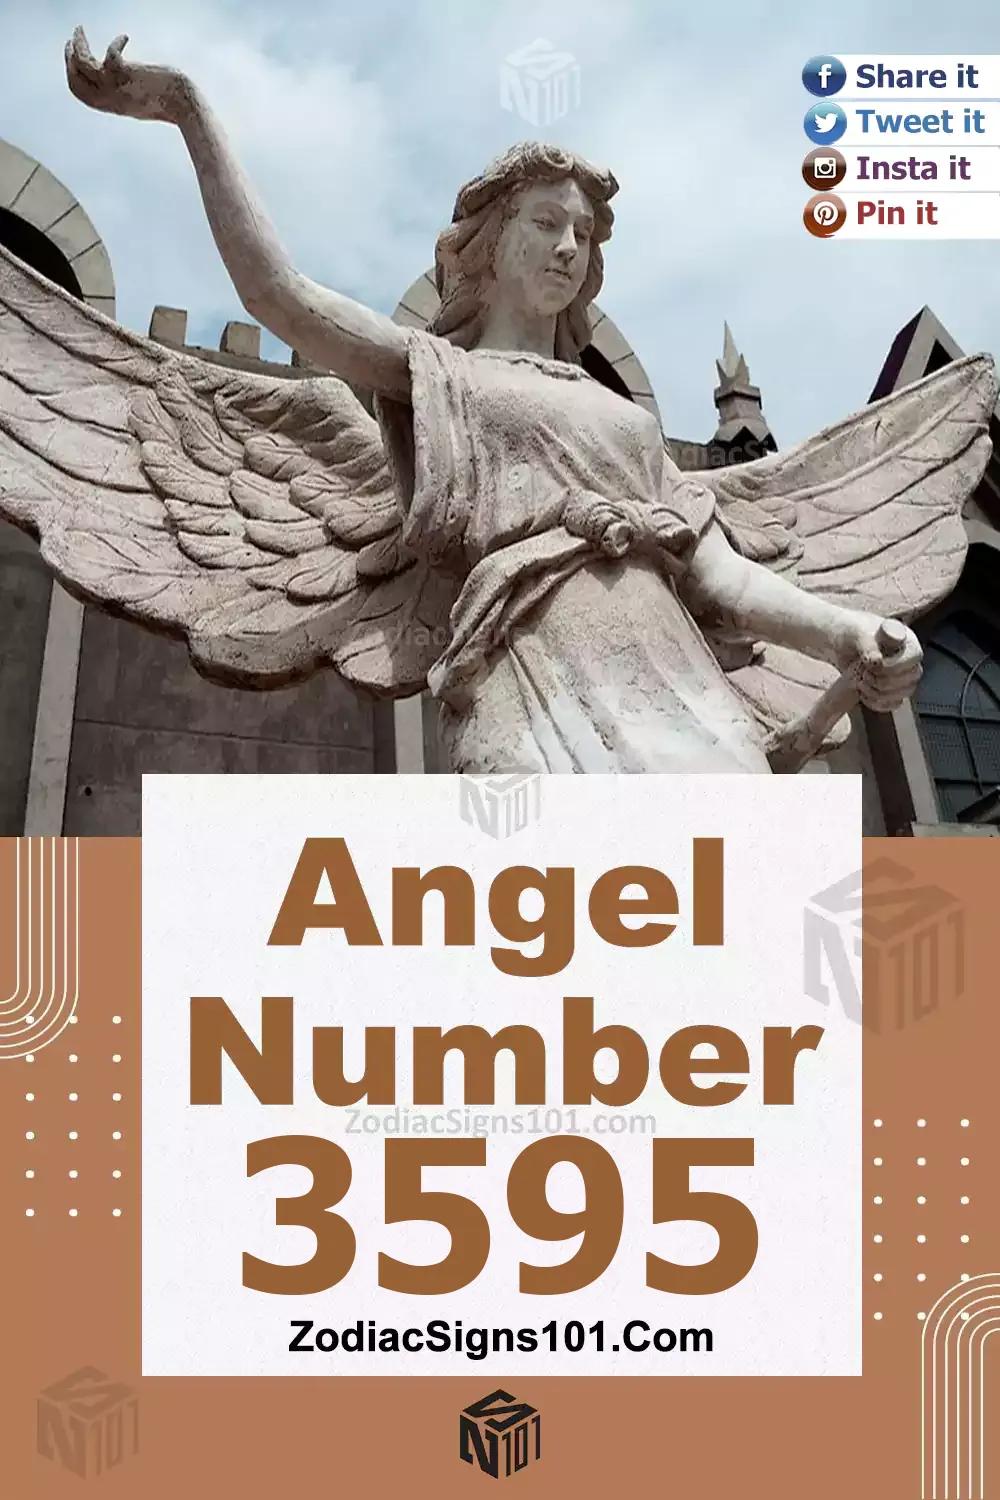 3595-Angel-Number-Meaning.jpg